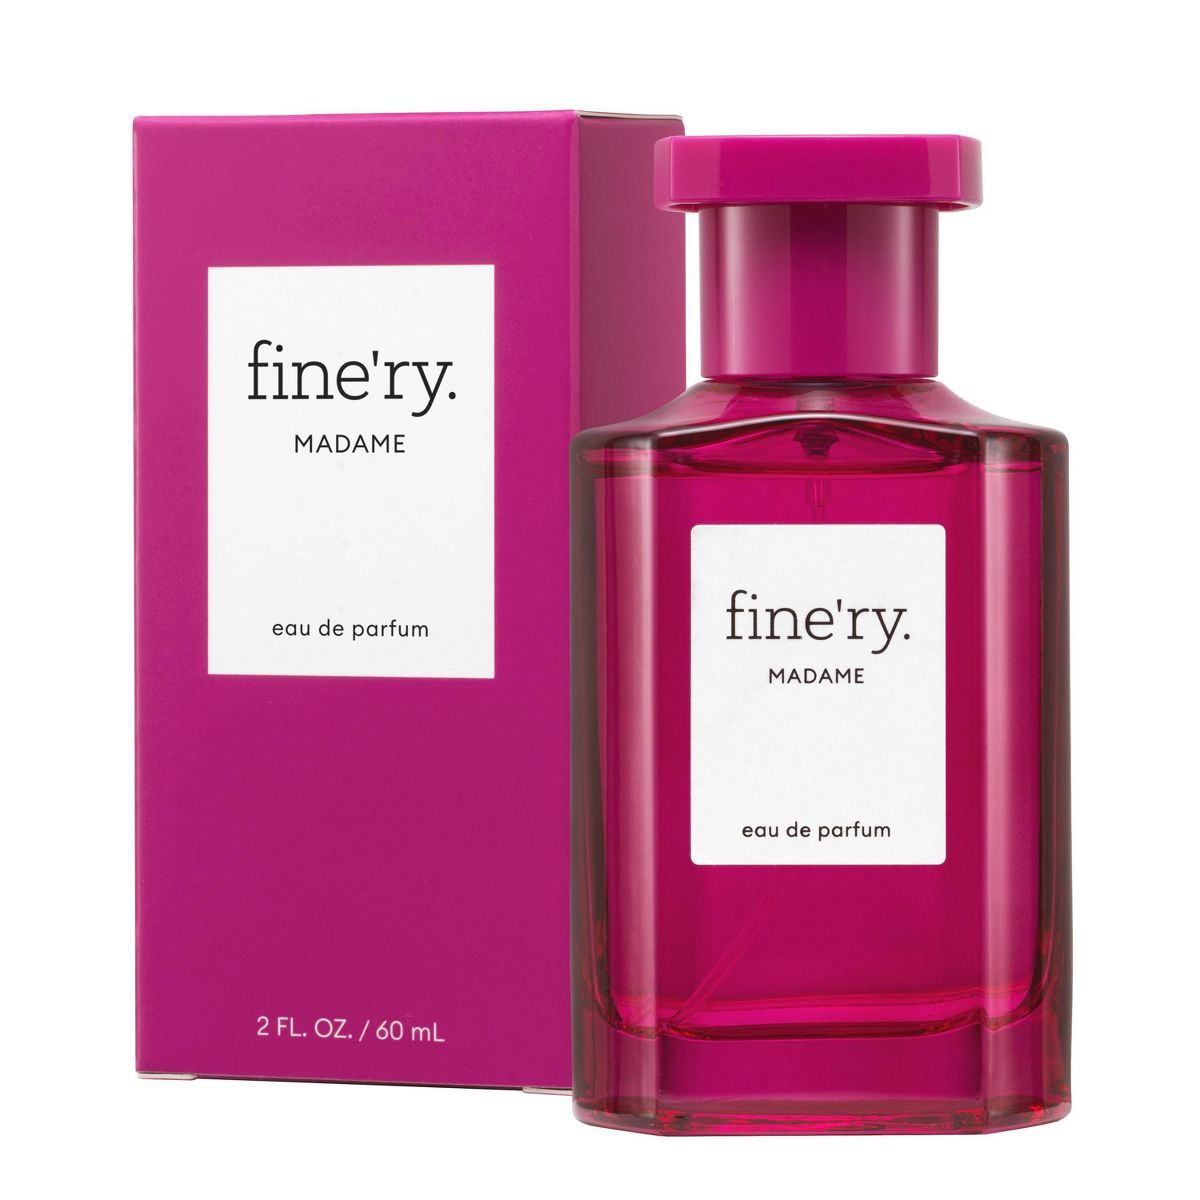 fine'ry. Women's Eau de Parfum Perfume - Madame - 2 fl oz | Target